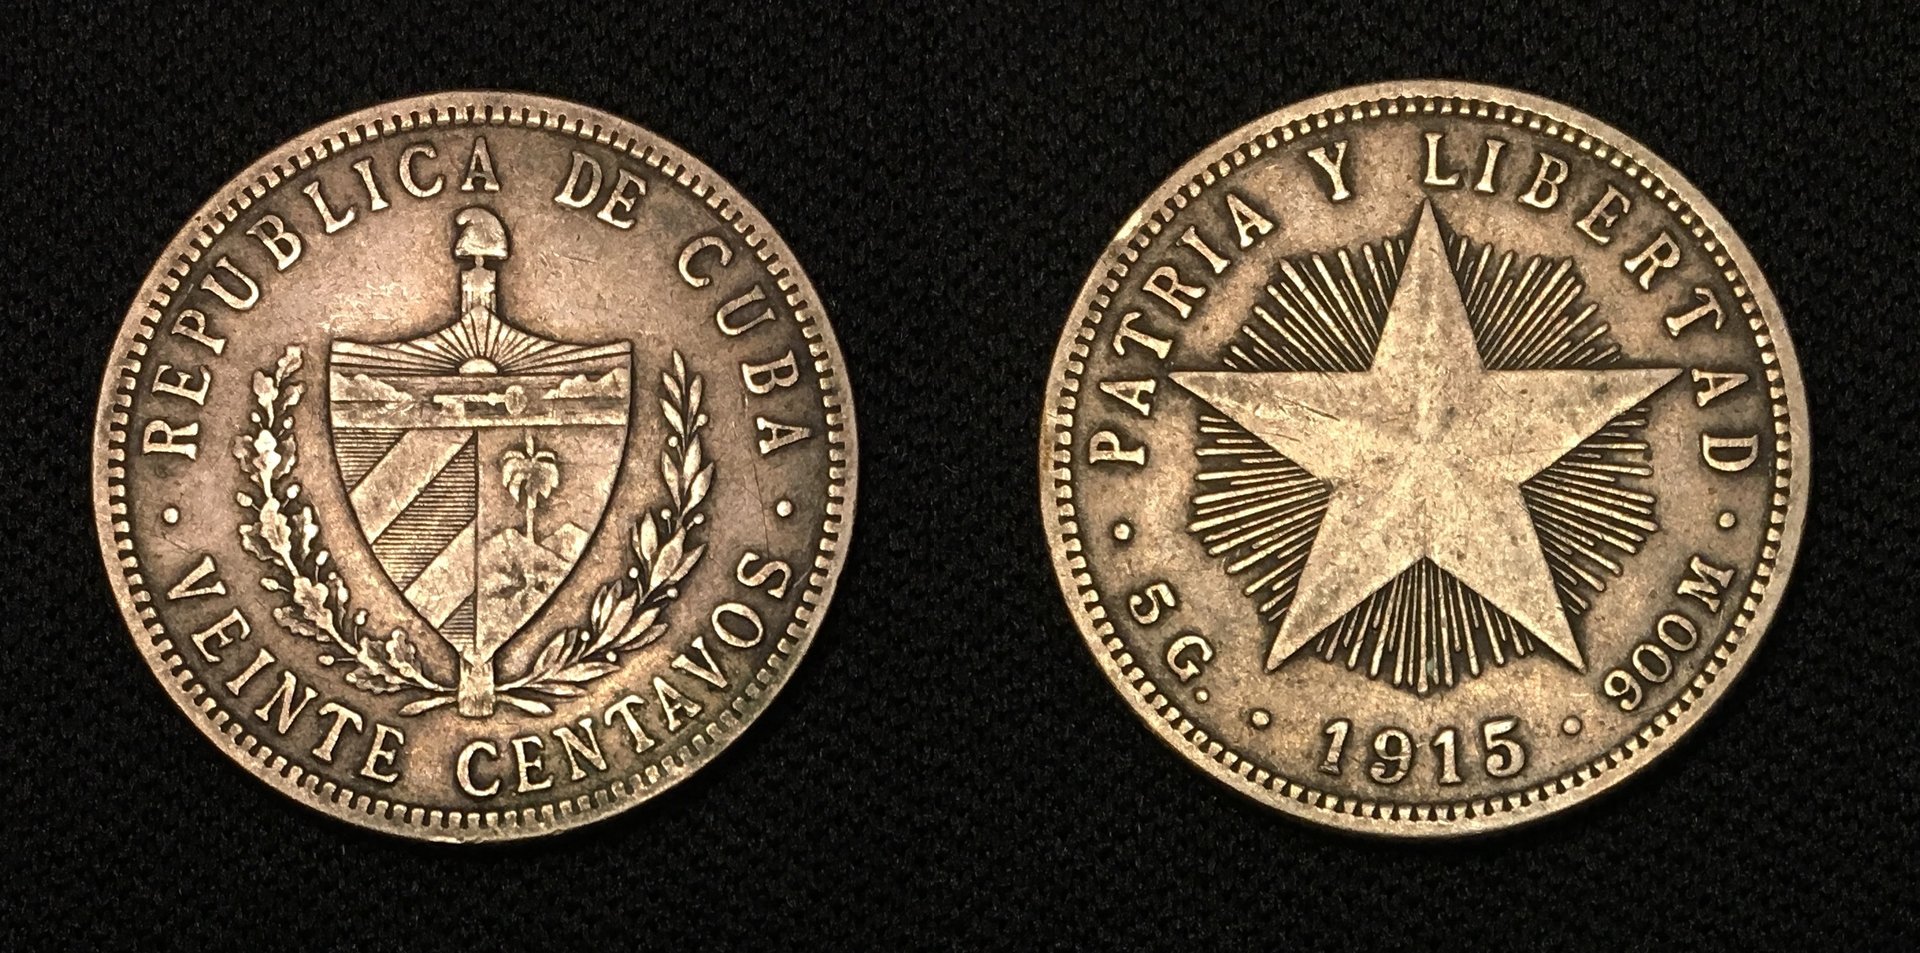 1915 20 Centavos Combined.jpg